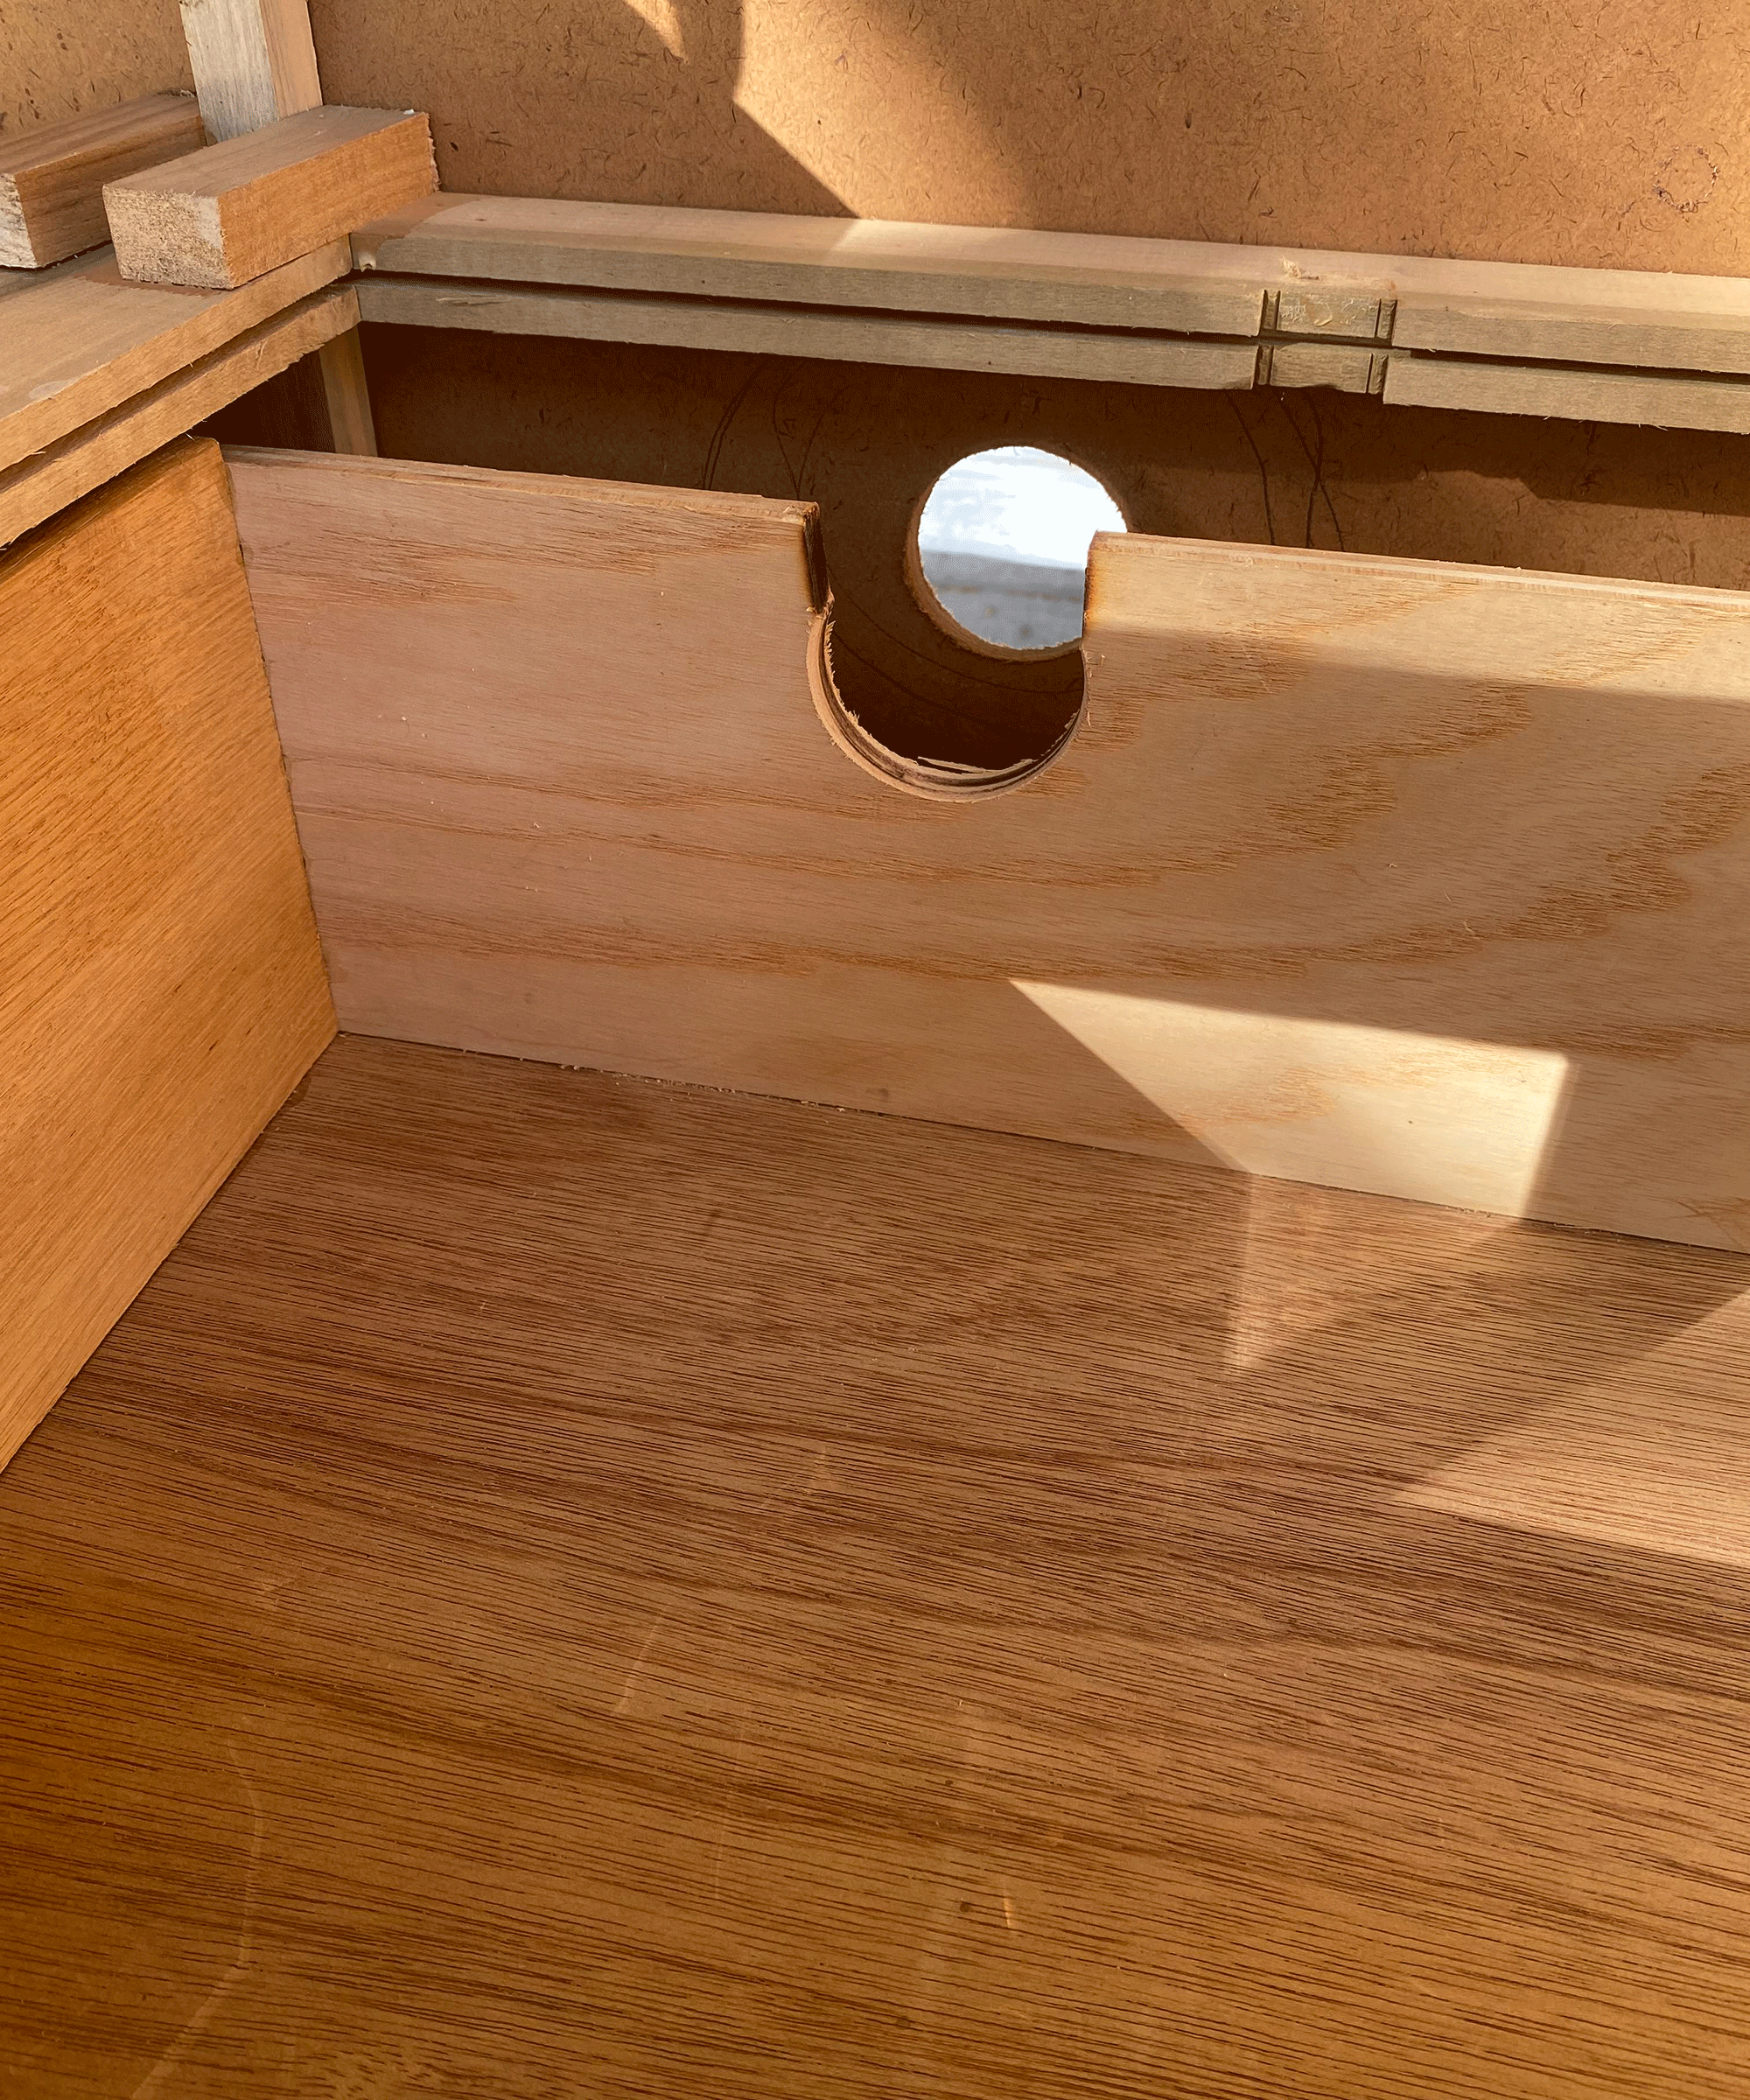 Carpentry work in wooden dresser vanity to accomodate for sanitaryware plumbing